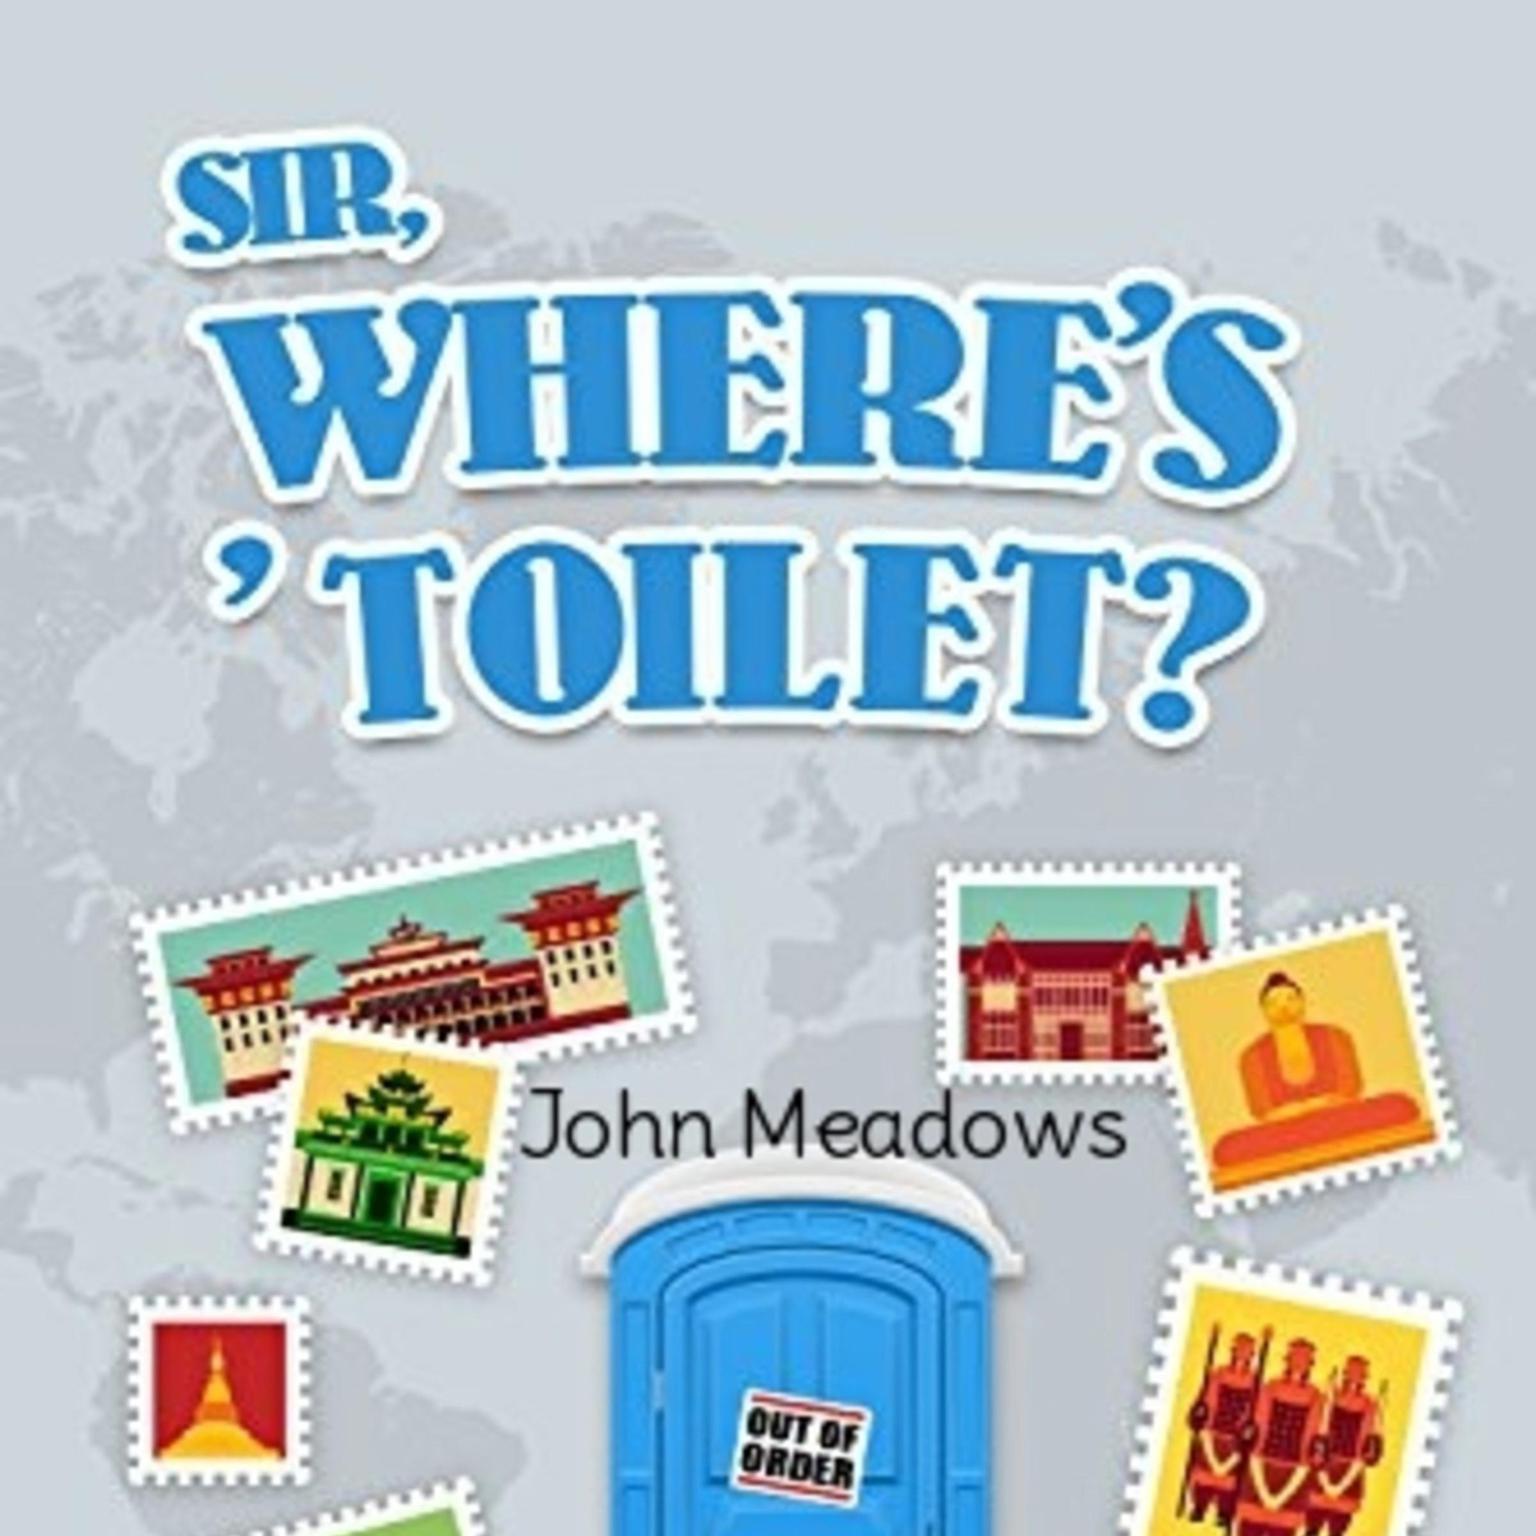 Sir, Wheres Toilet? Audiobook, by John Meadows